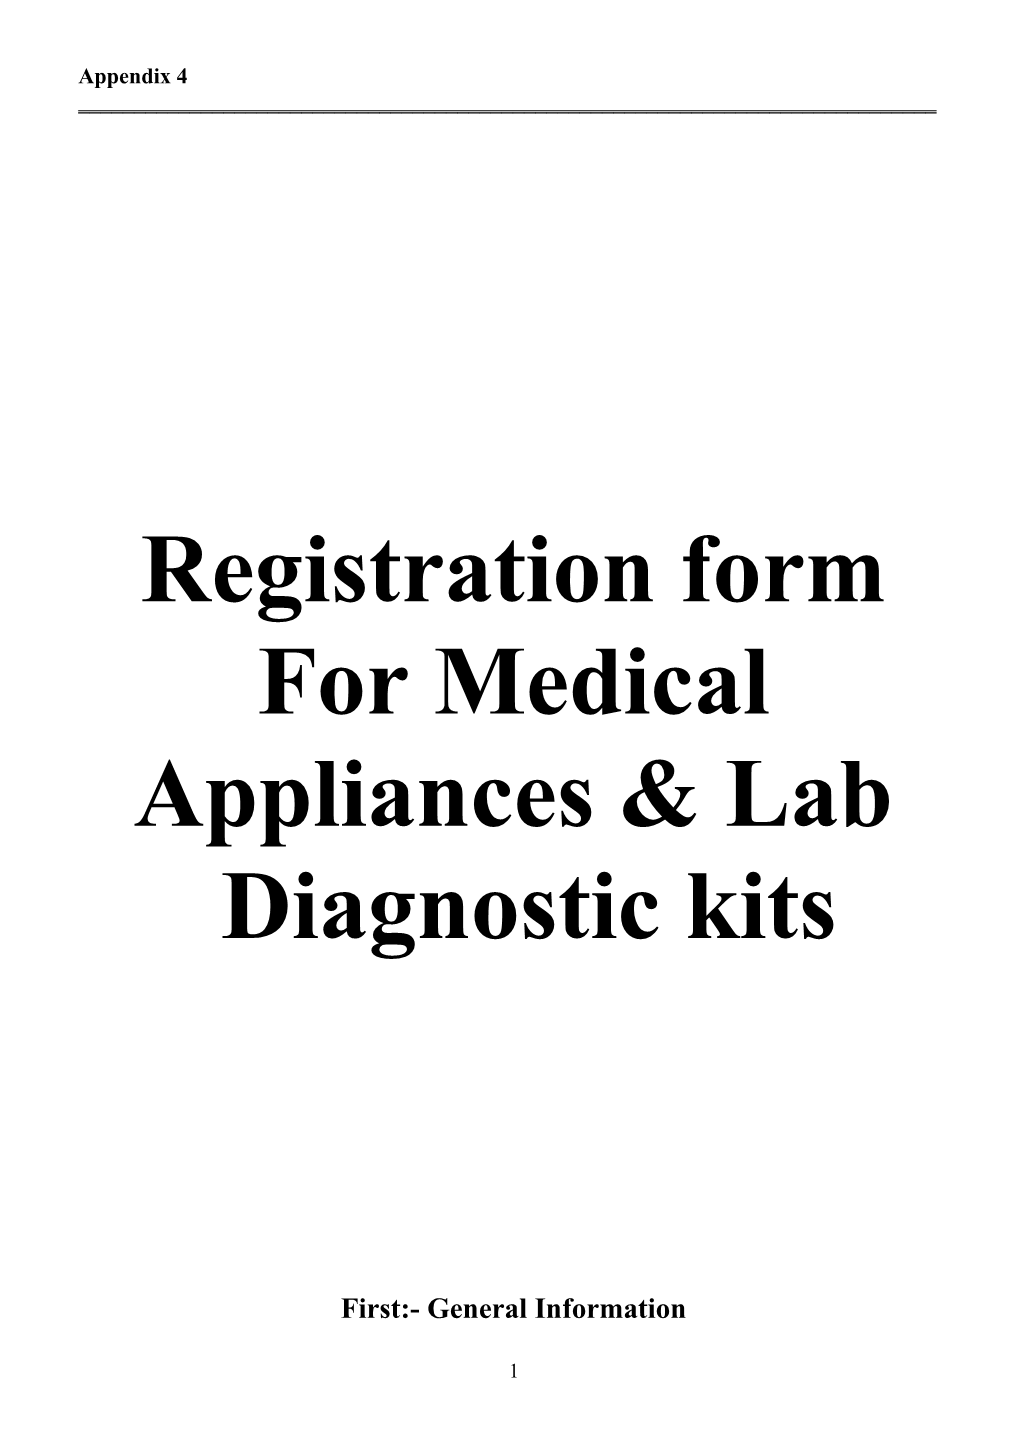 For Medical Appliances & Lab Diagnostic Kits